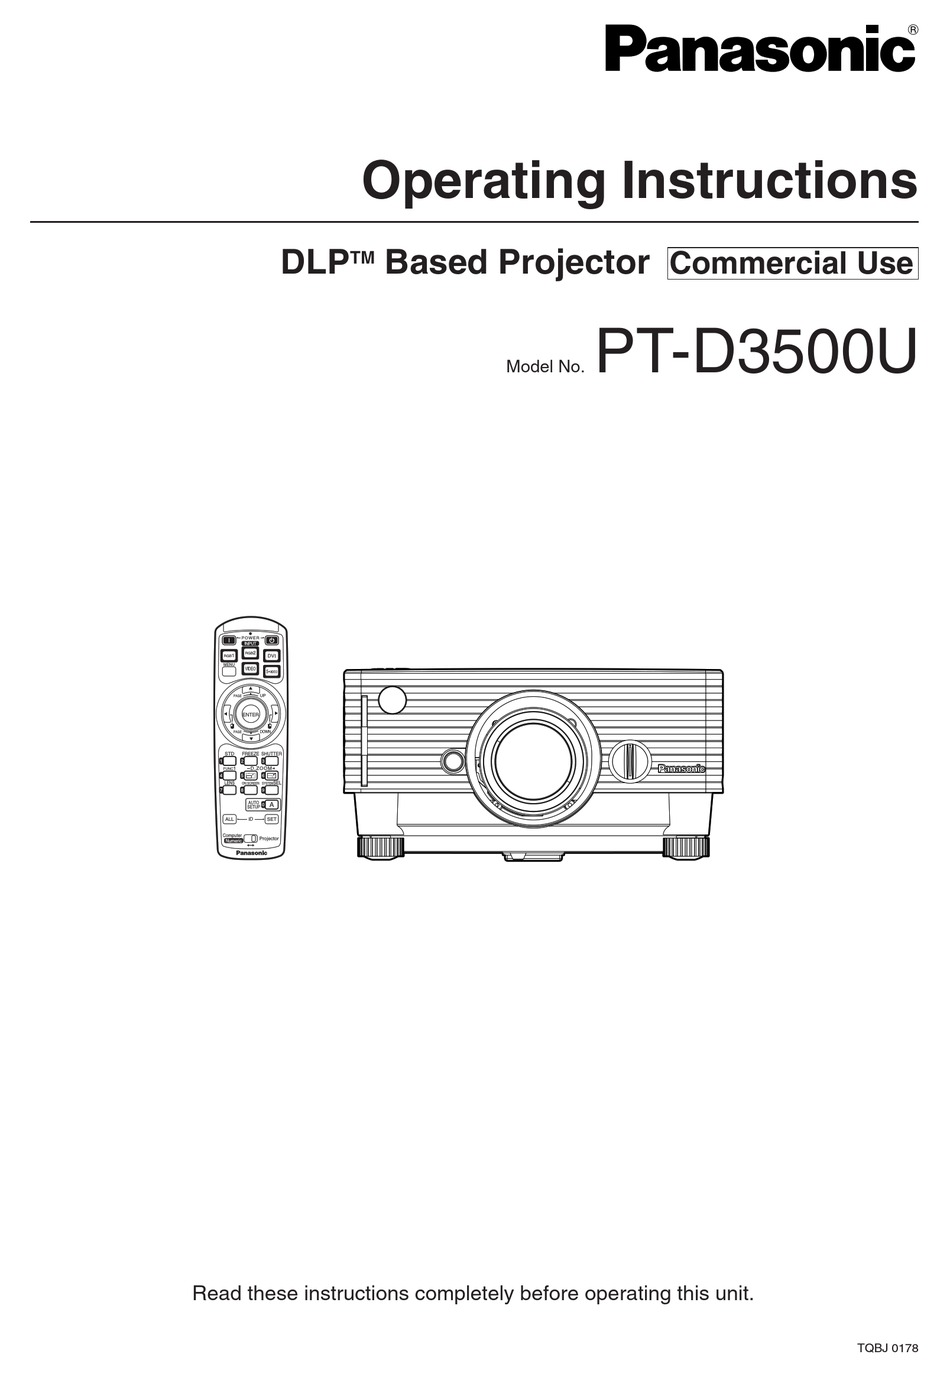 PANASONIC DLP PT-D3500U OPERATING INSTRUCTIONS MANUAL Pdf Download 